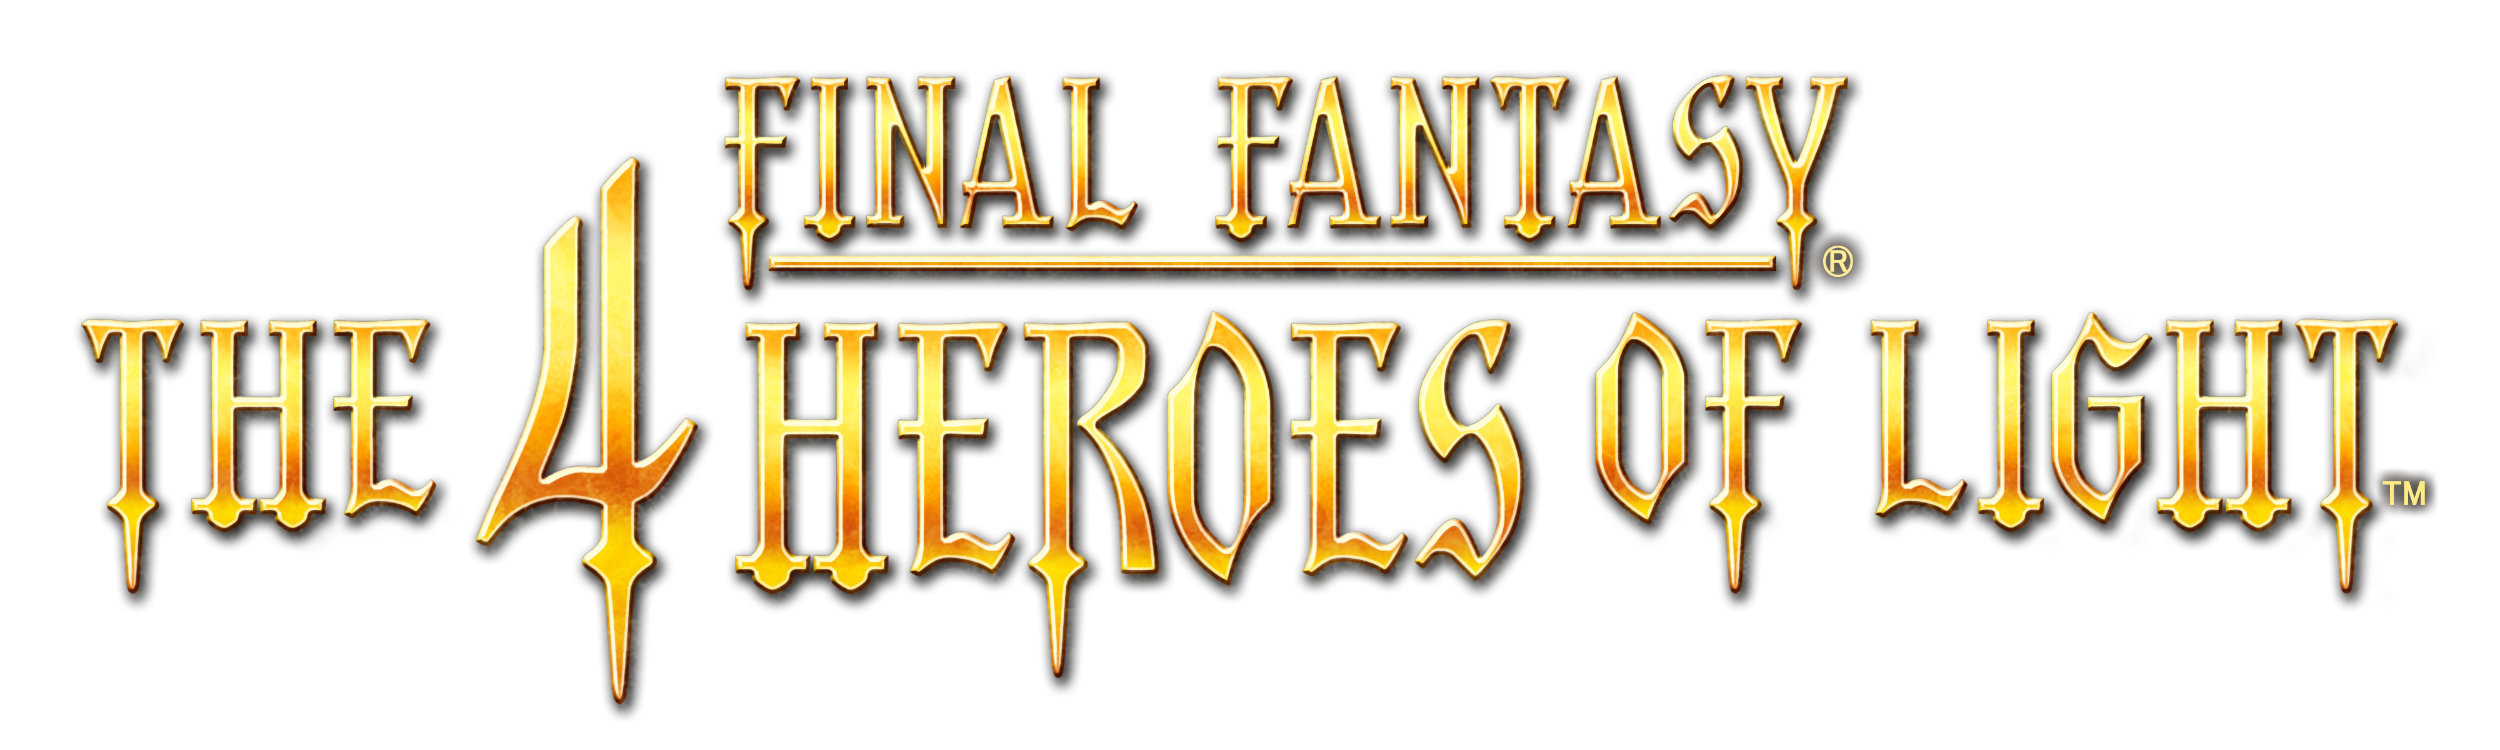 Final Fantasy The 4 Heroes of Light Logo 001